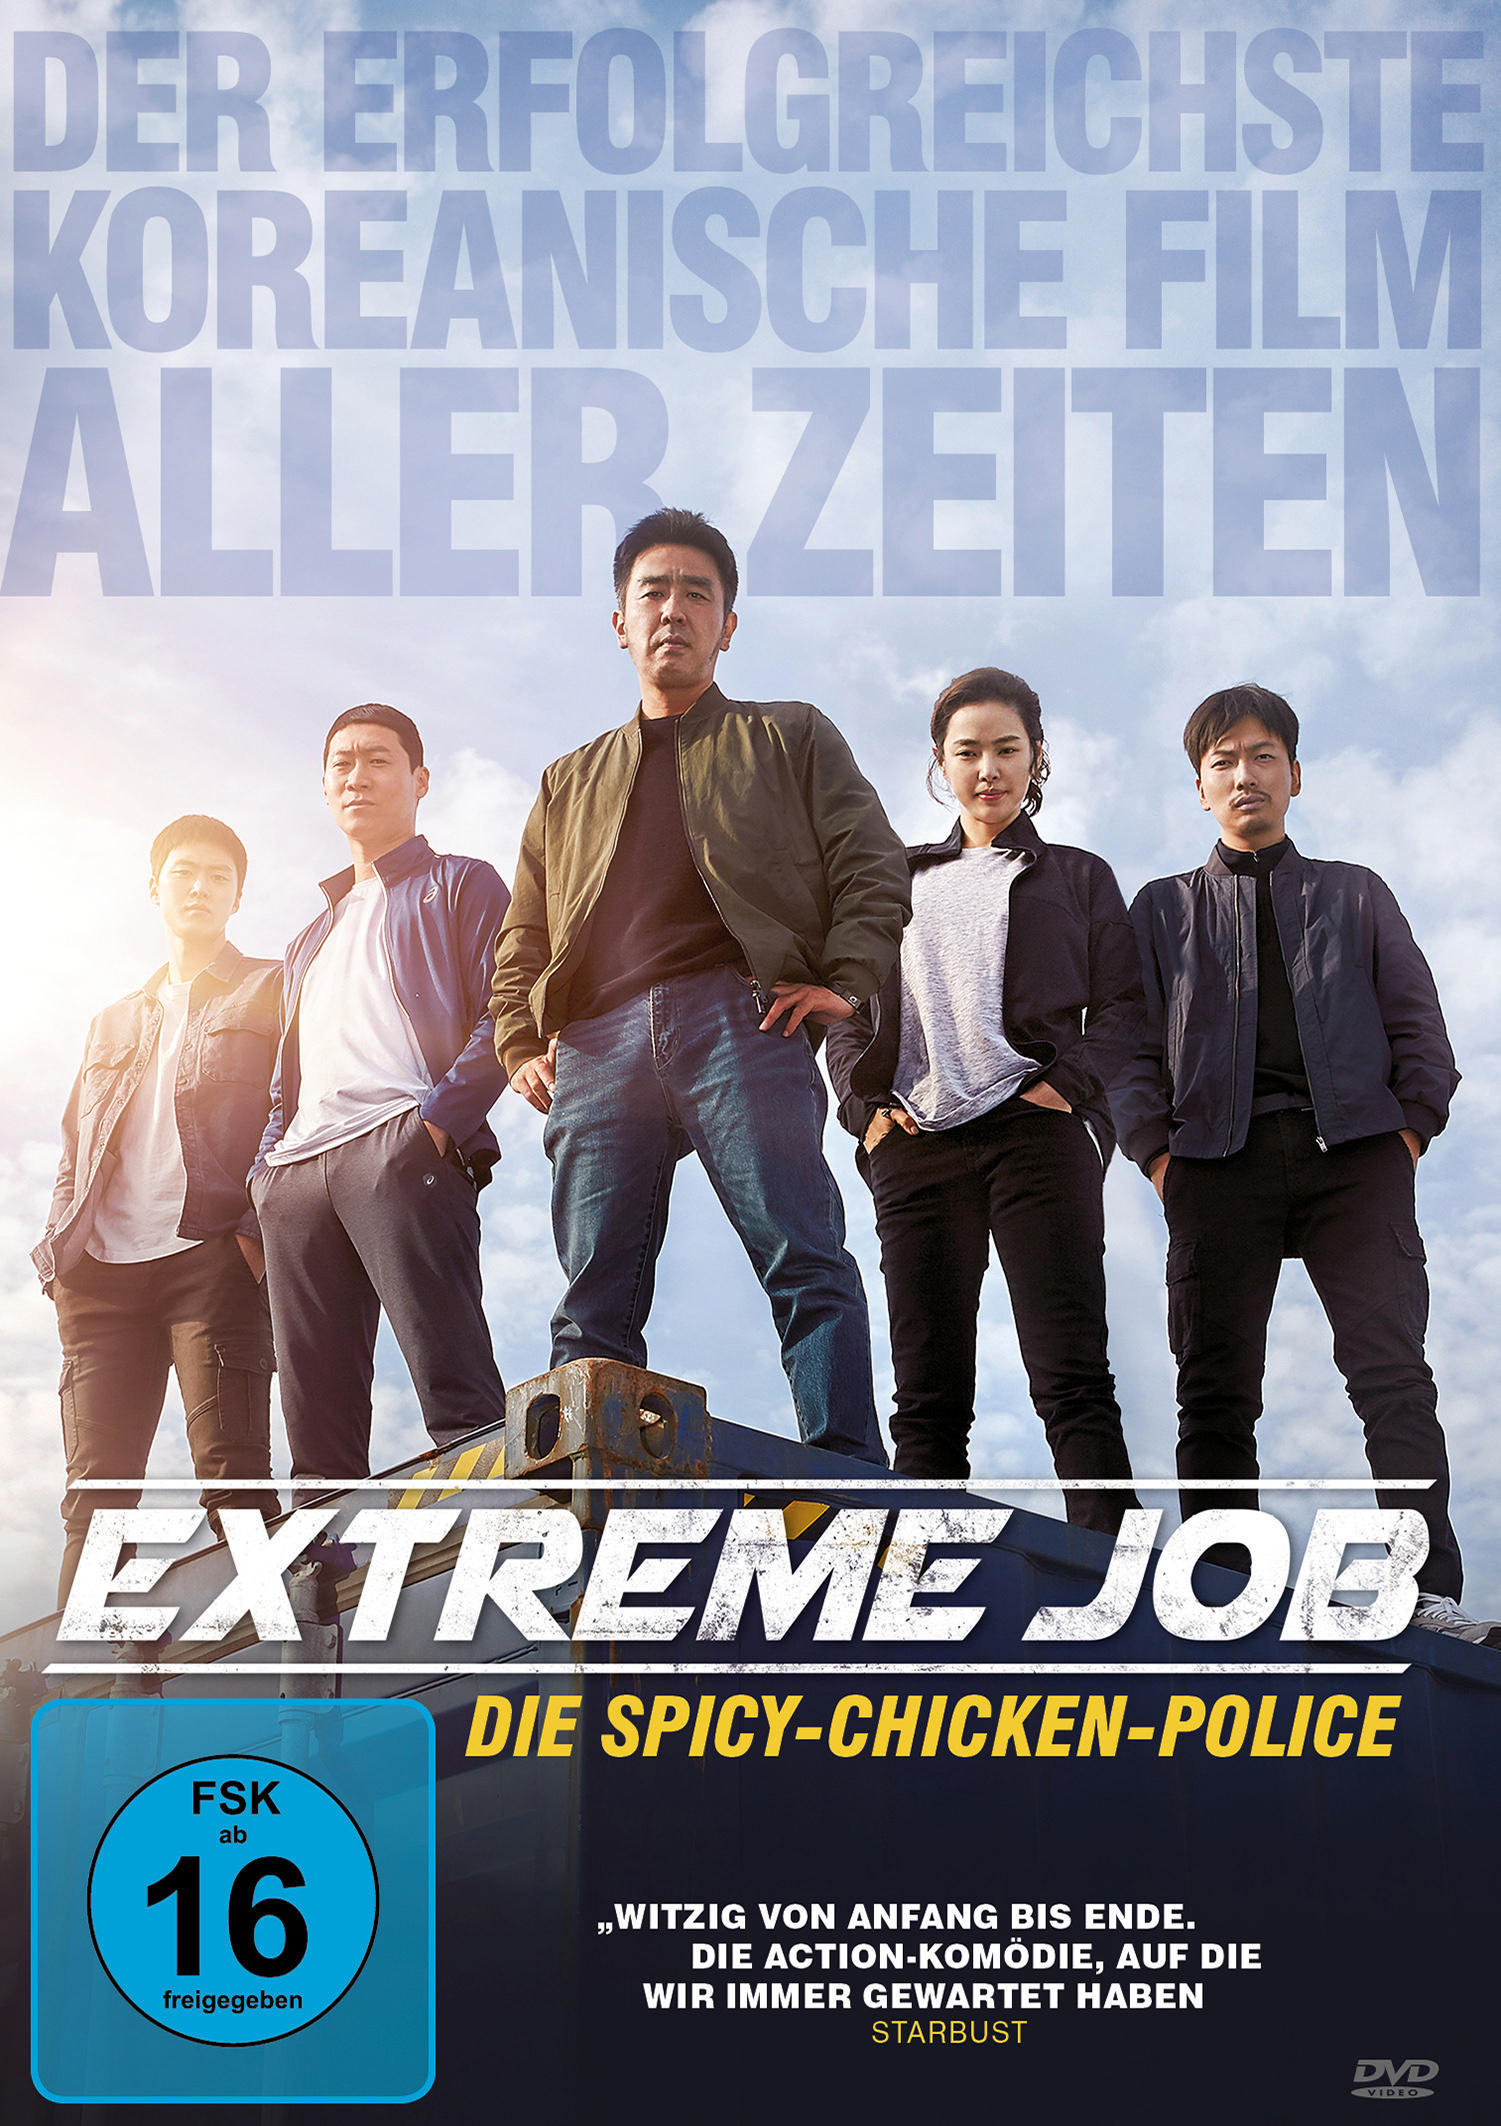 Job Spicy-Chicken-Police DVD Extreme -